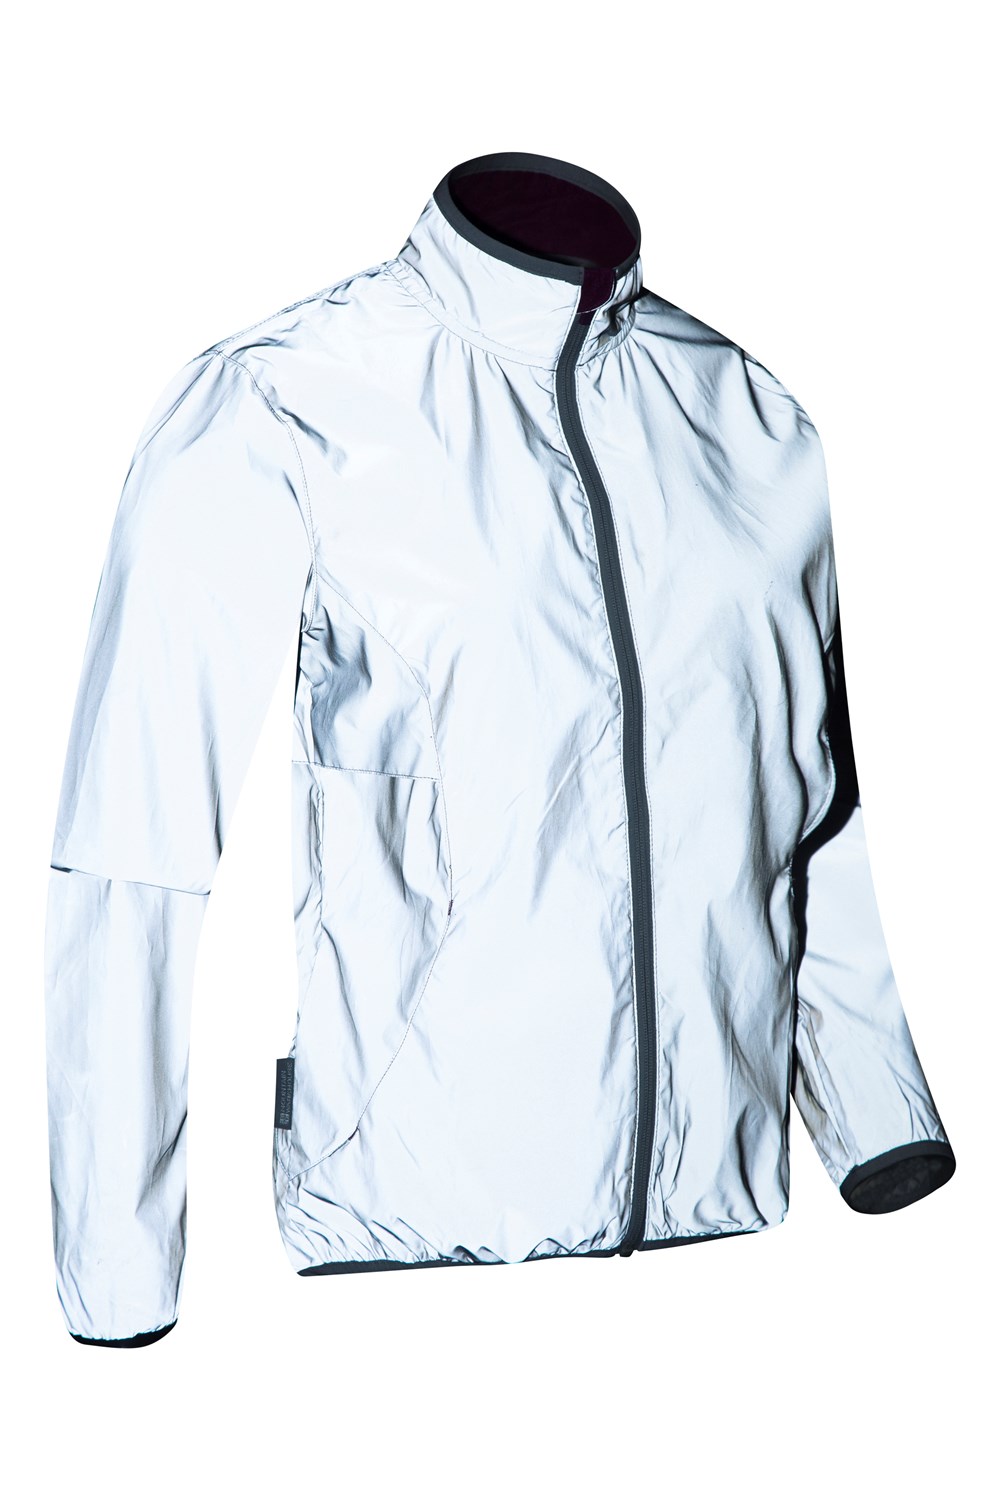 Trespass Men's Ultra Reflective Active Jacket Zig Trespass, 44% OFF